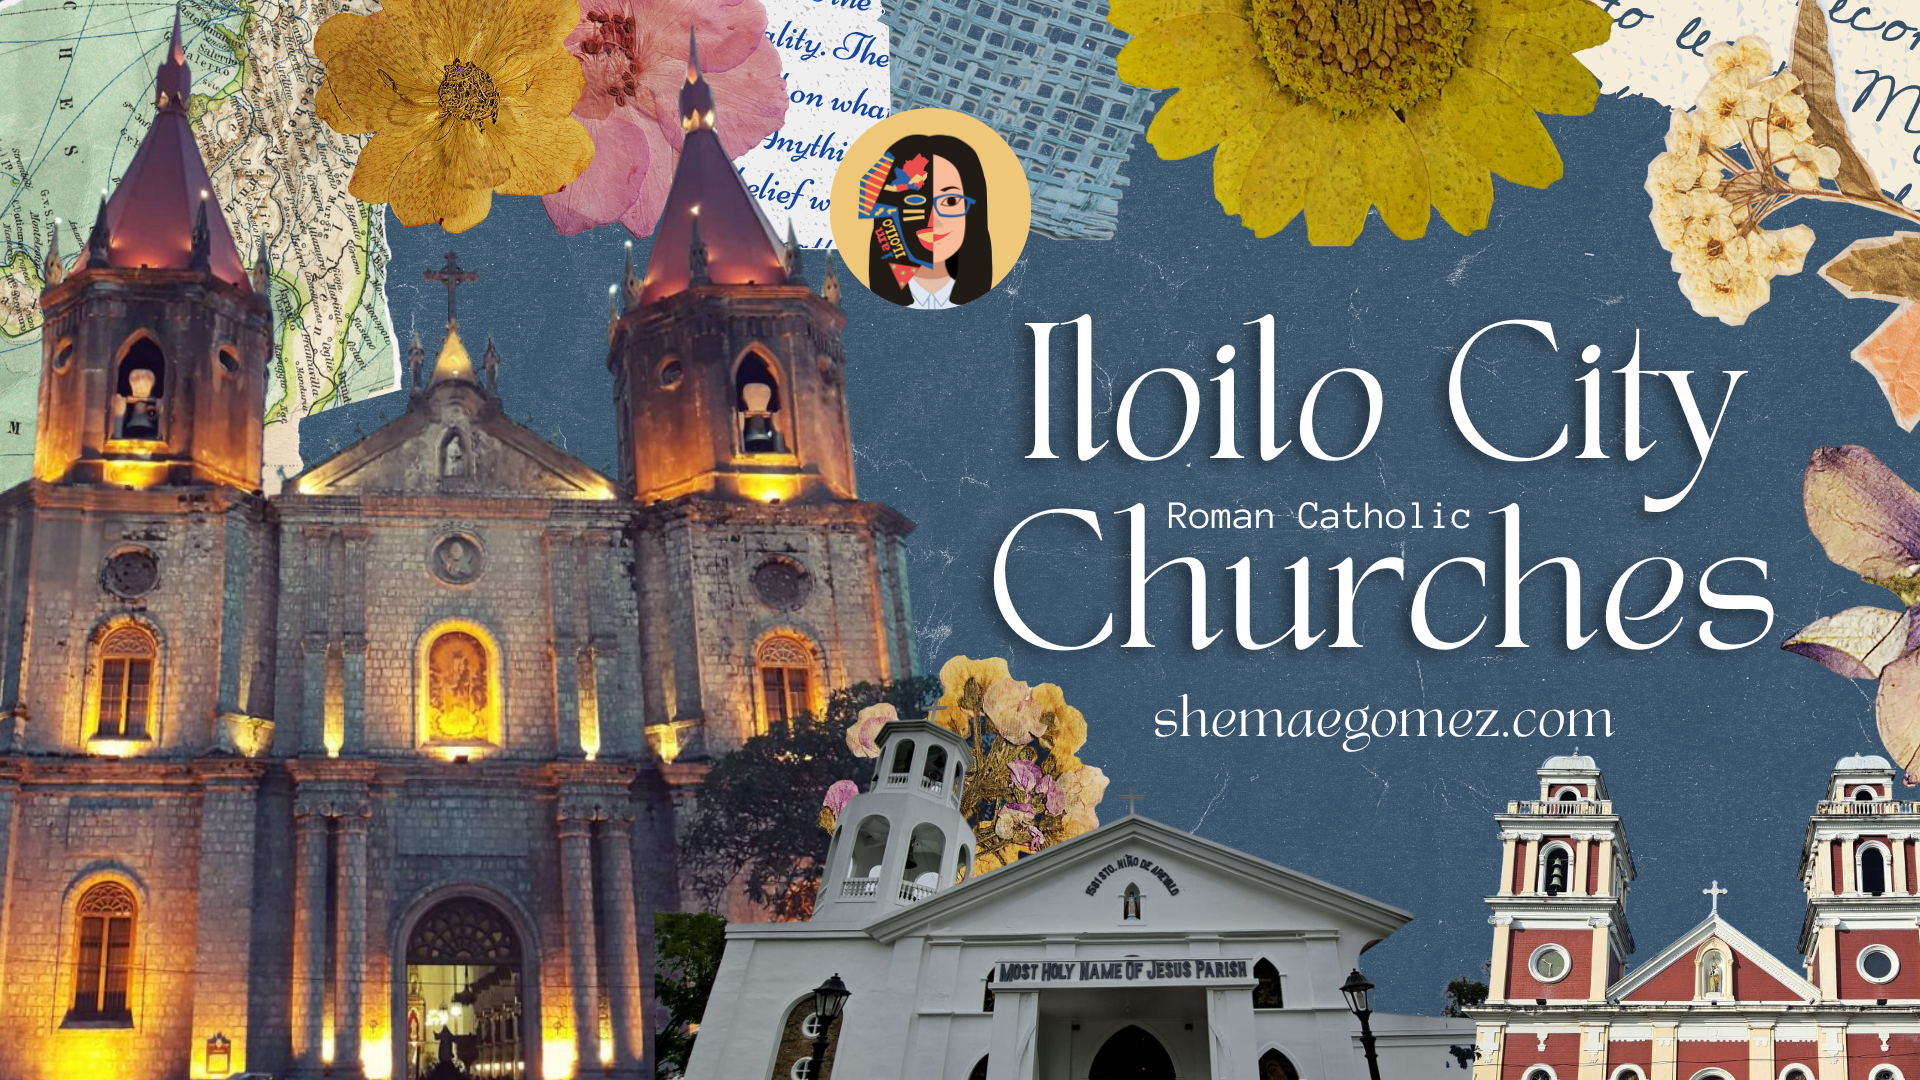 List of Roman Catholic Churches in Iloilo City